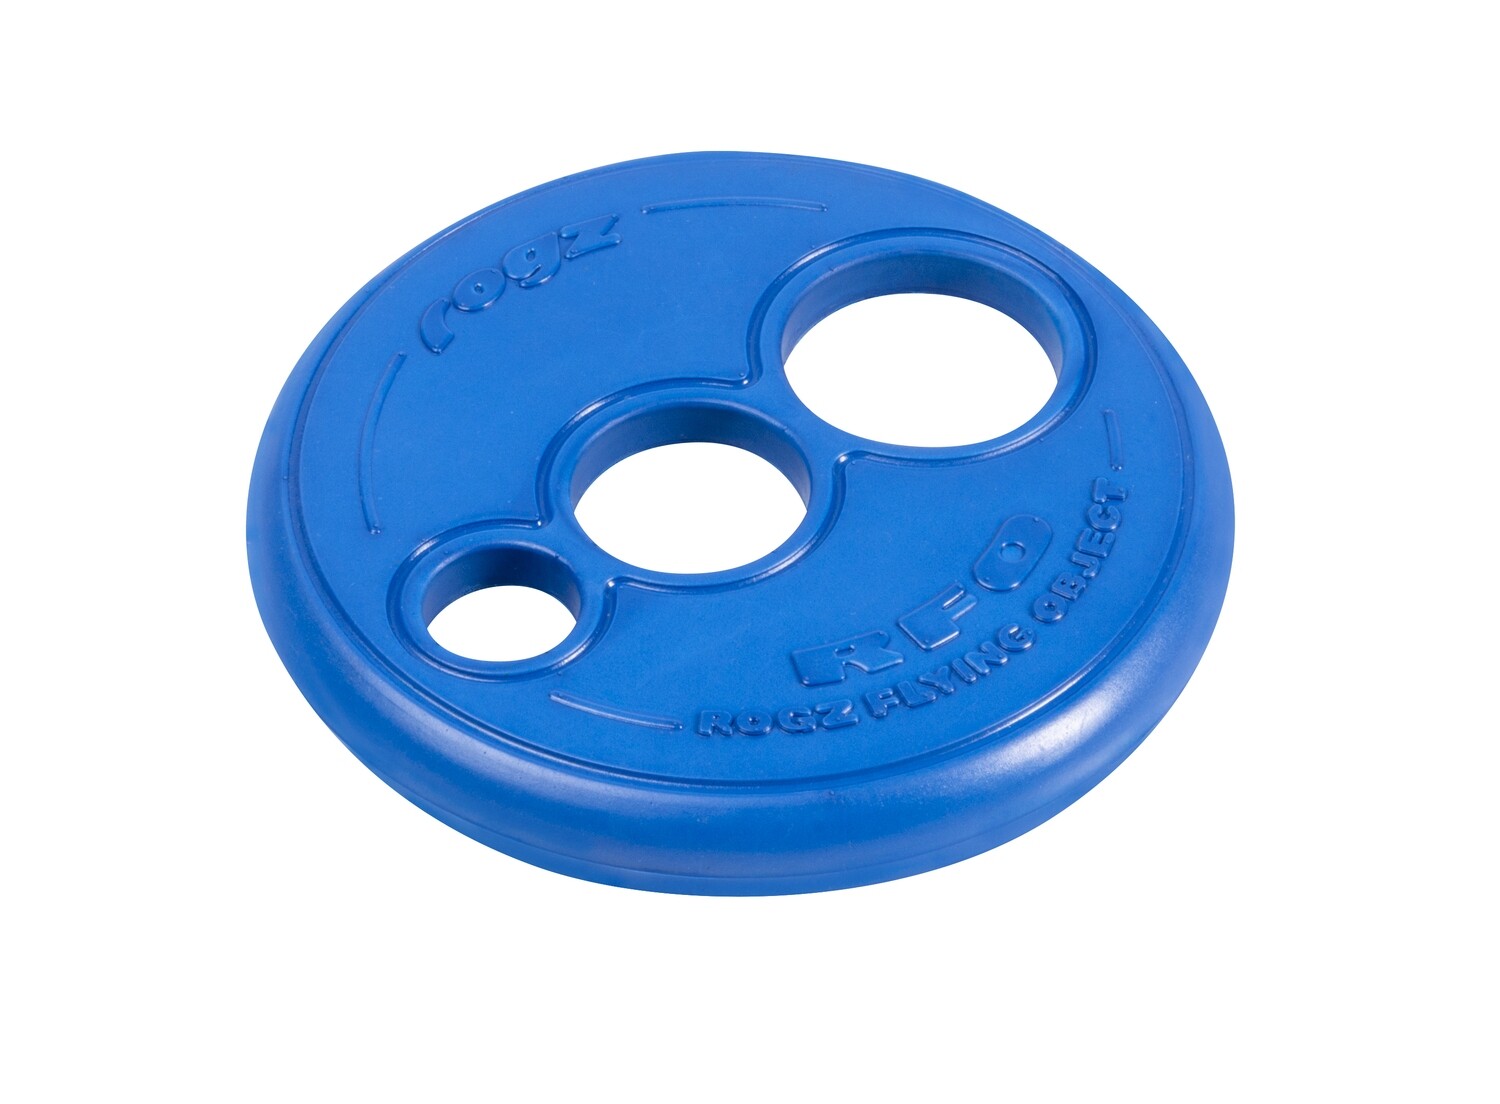 Rogz Yotz RFO Frisbee - Small, Blue